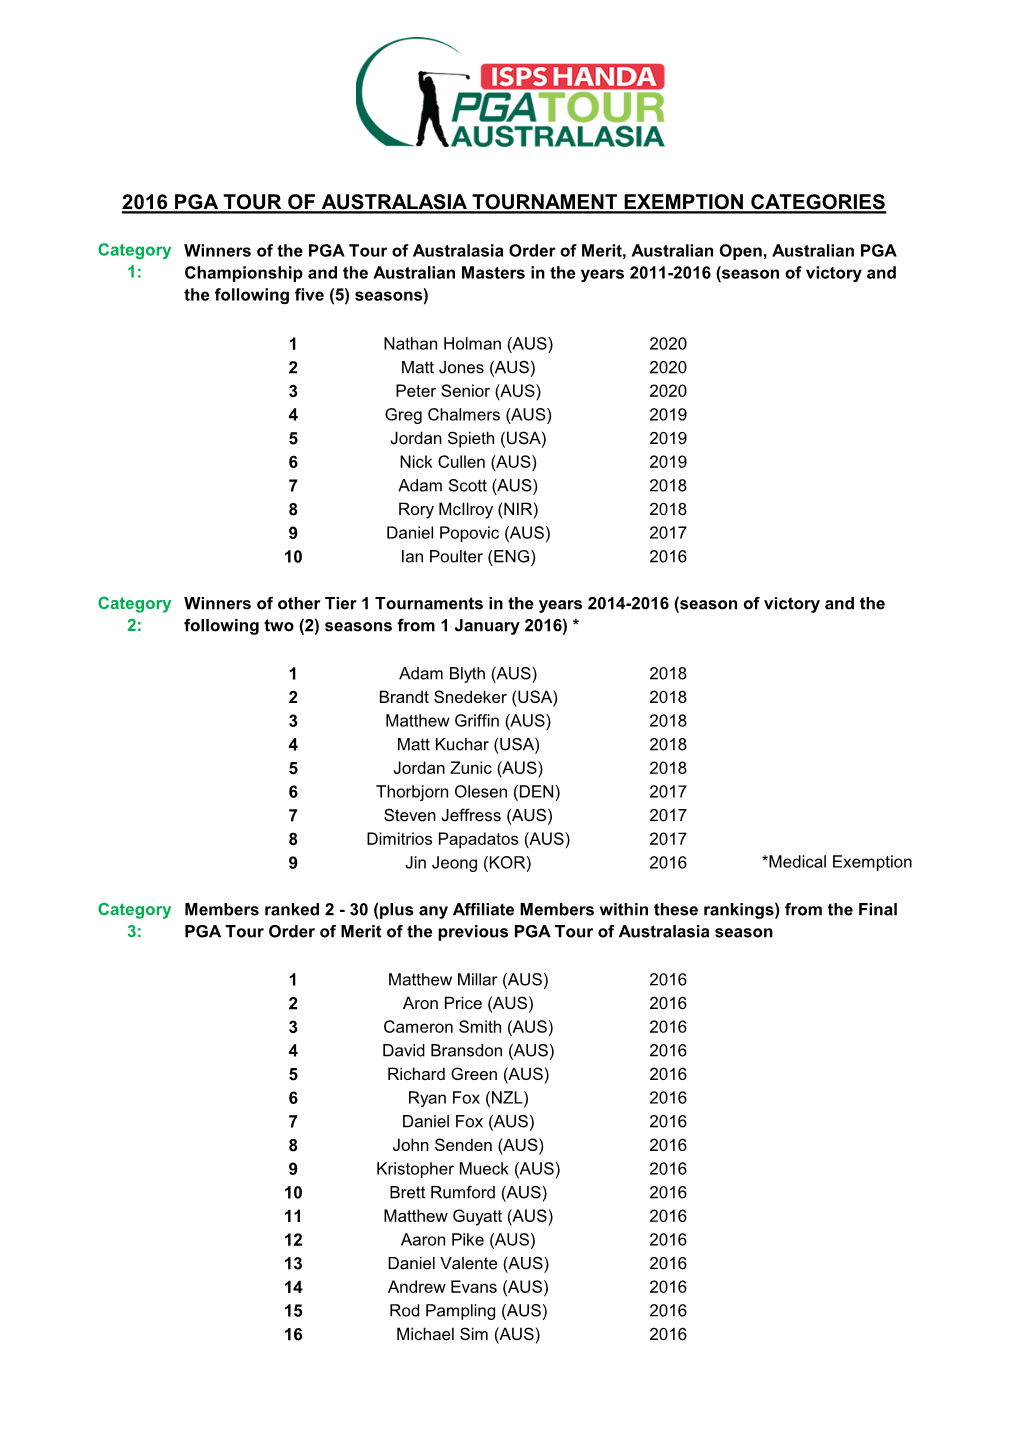 2016 Pga Tour of Australasia Tournament Exemption Categories